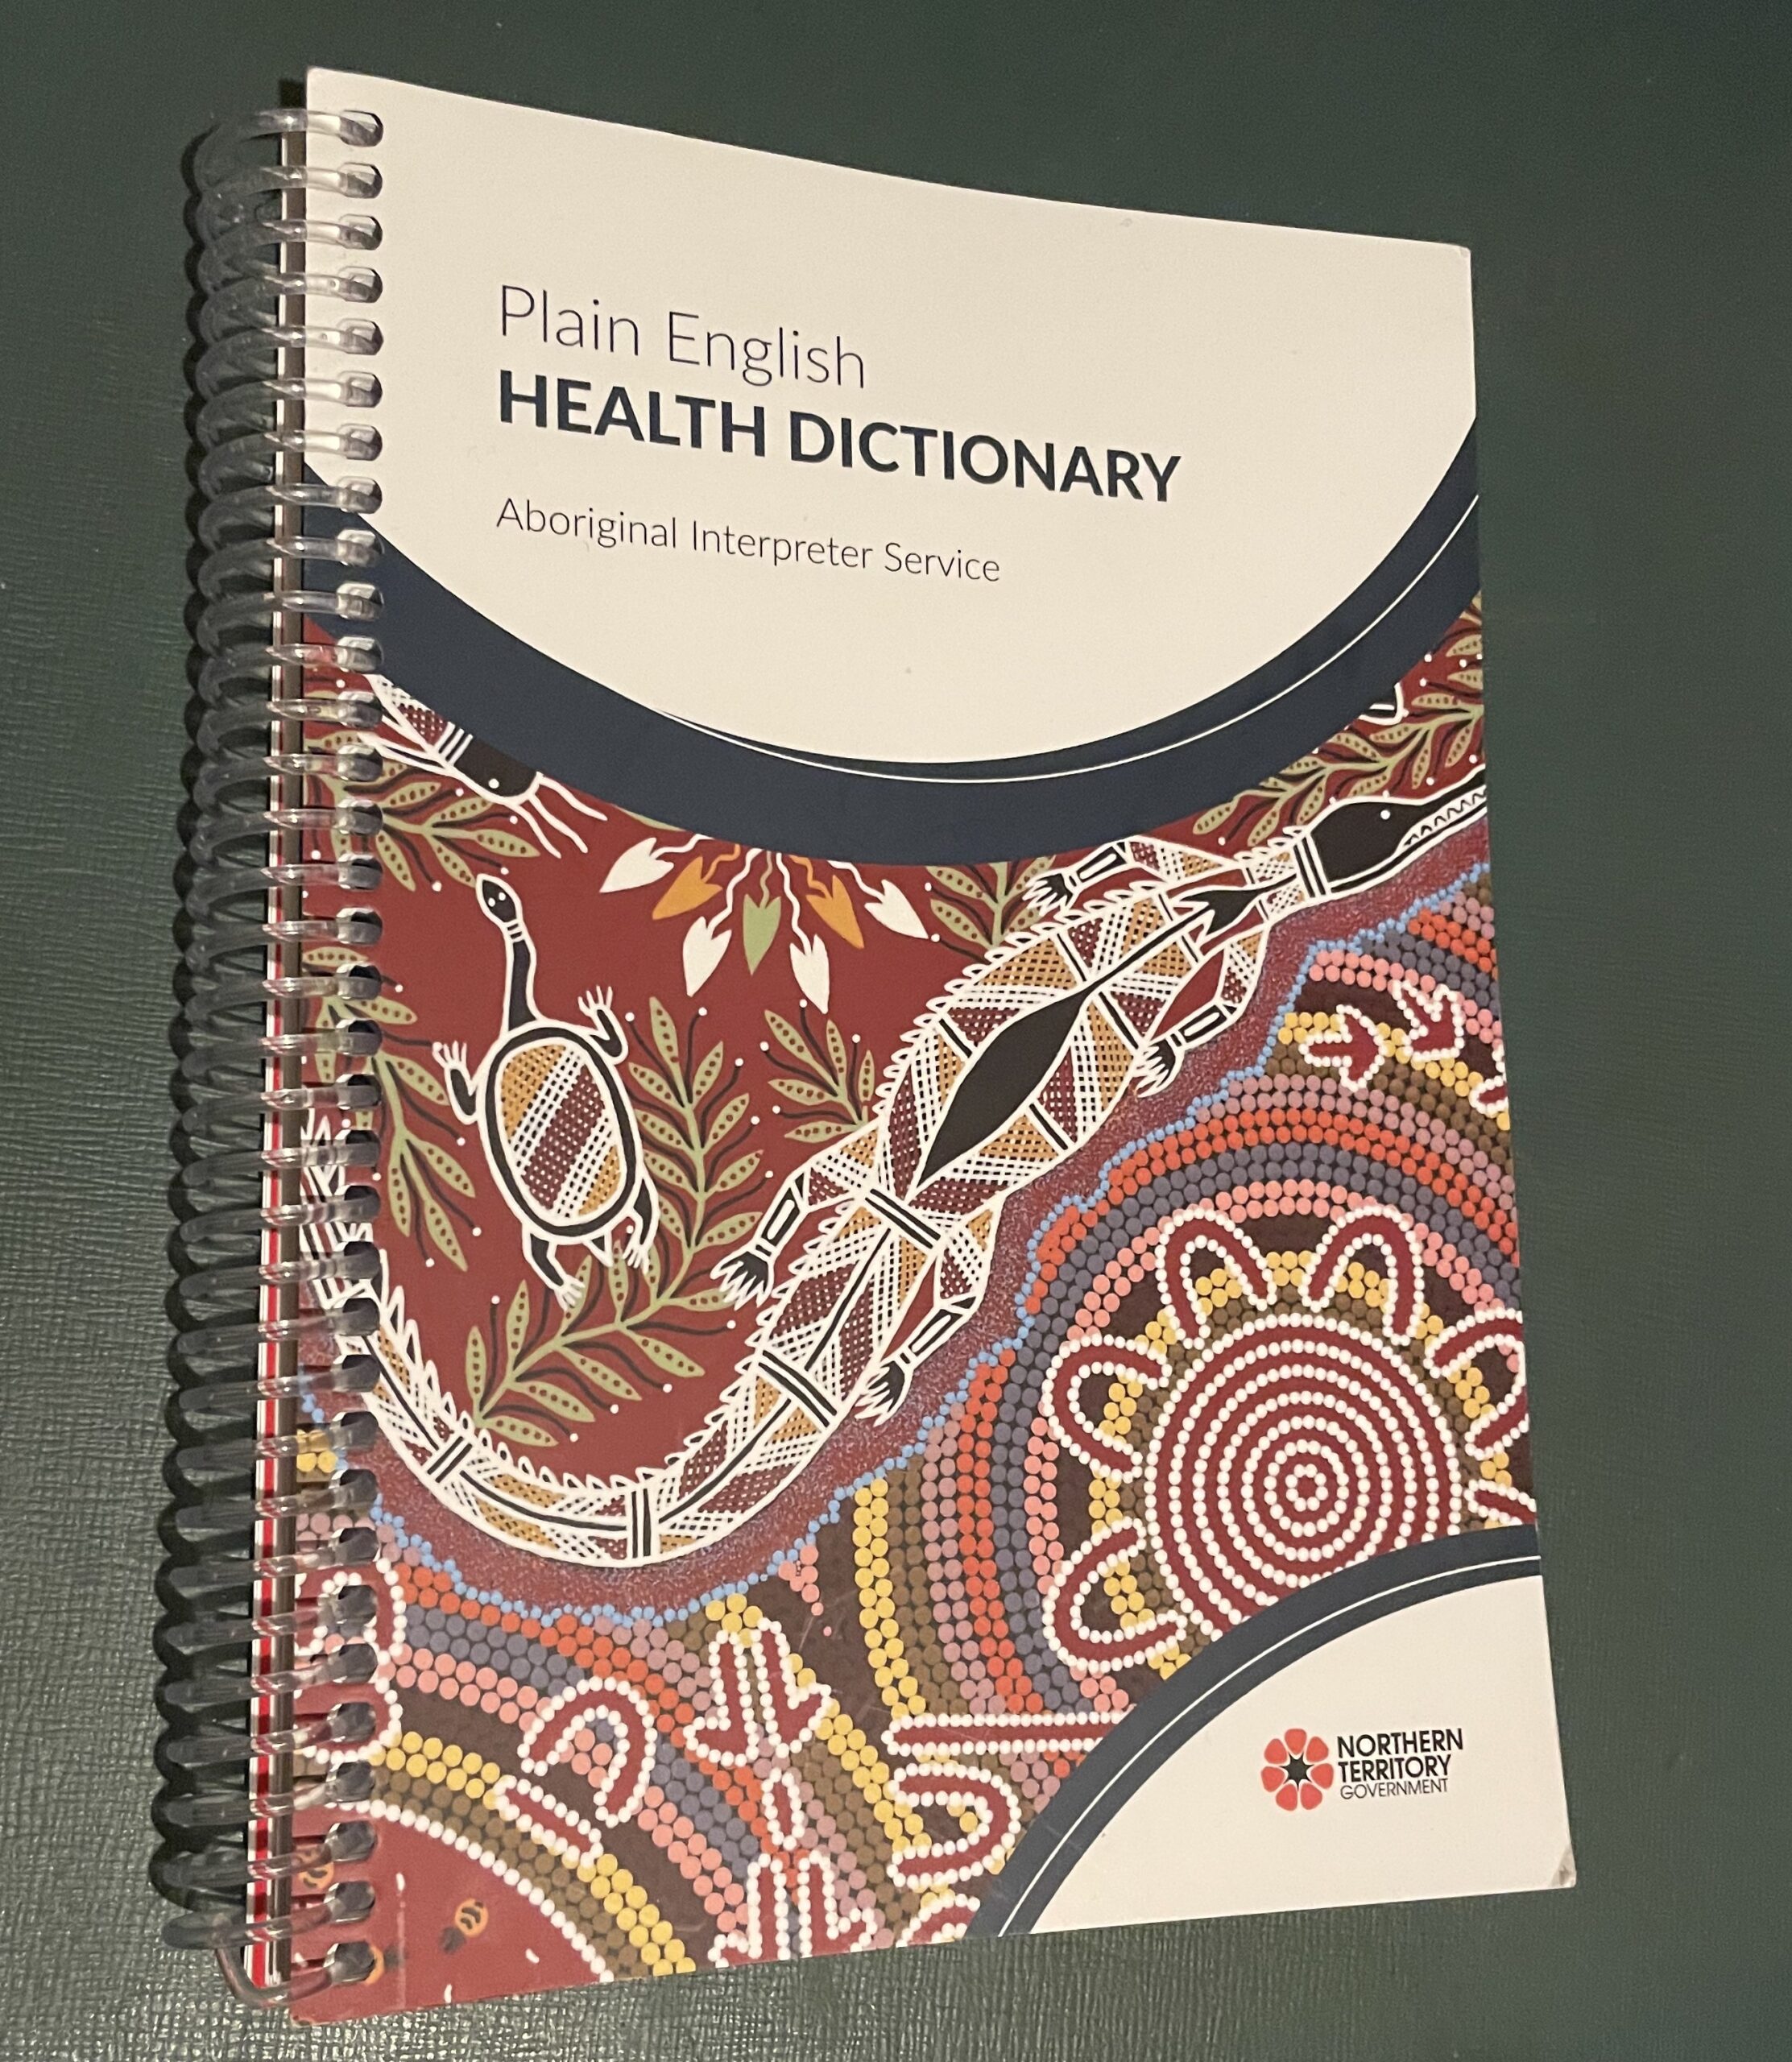 Plain English Health Dictionary Copy